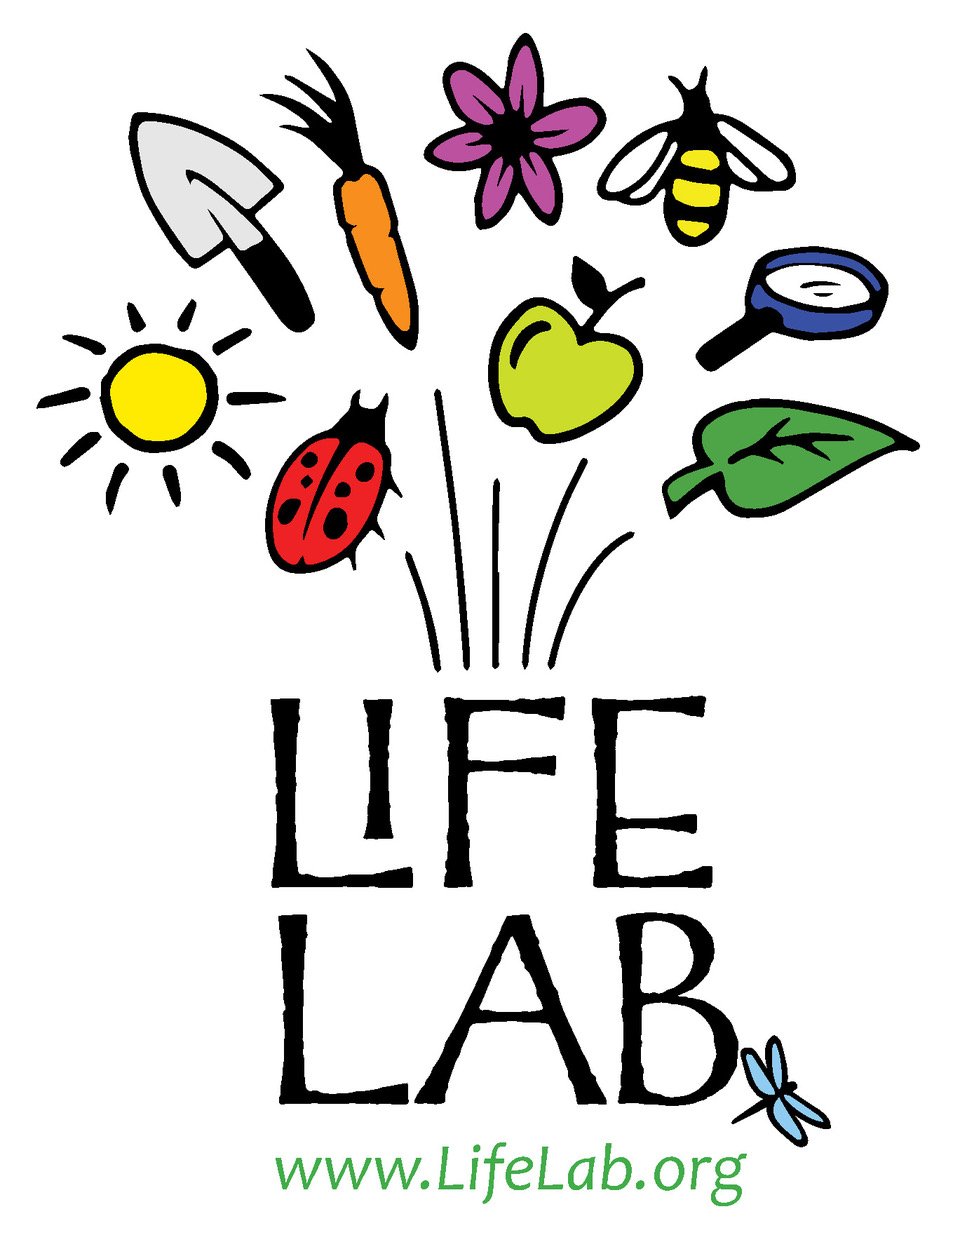 Life Lab logo - Judit Camacho.jpg